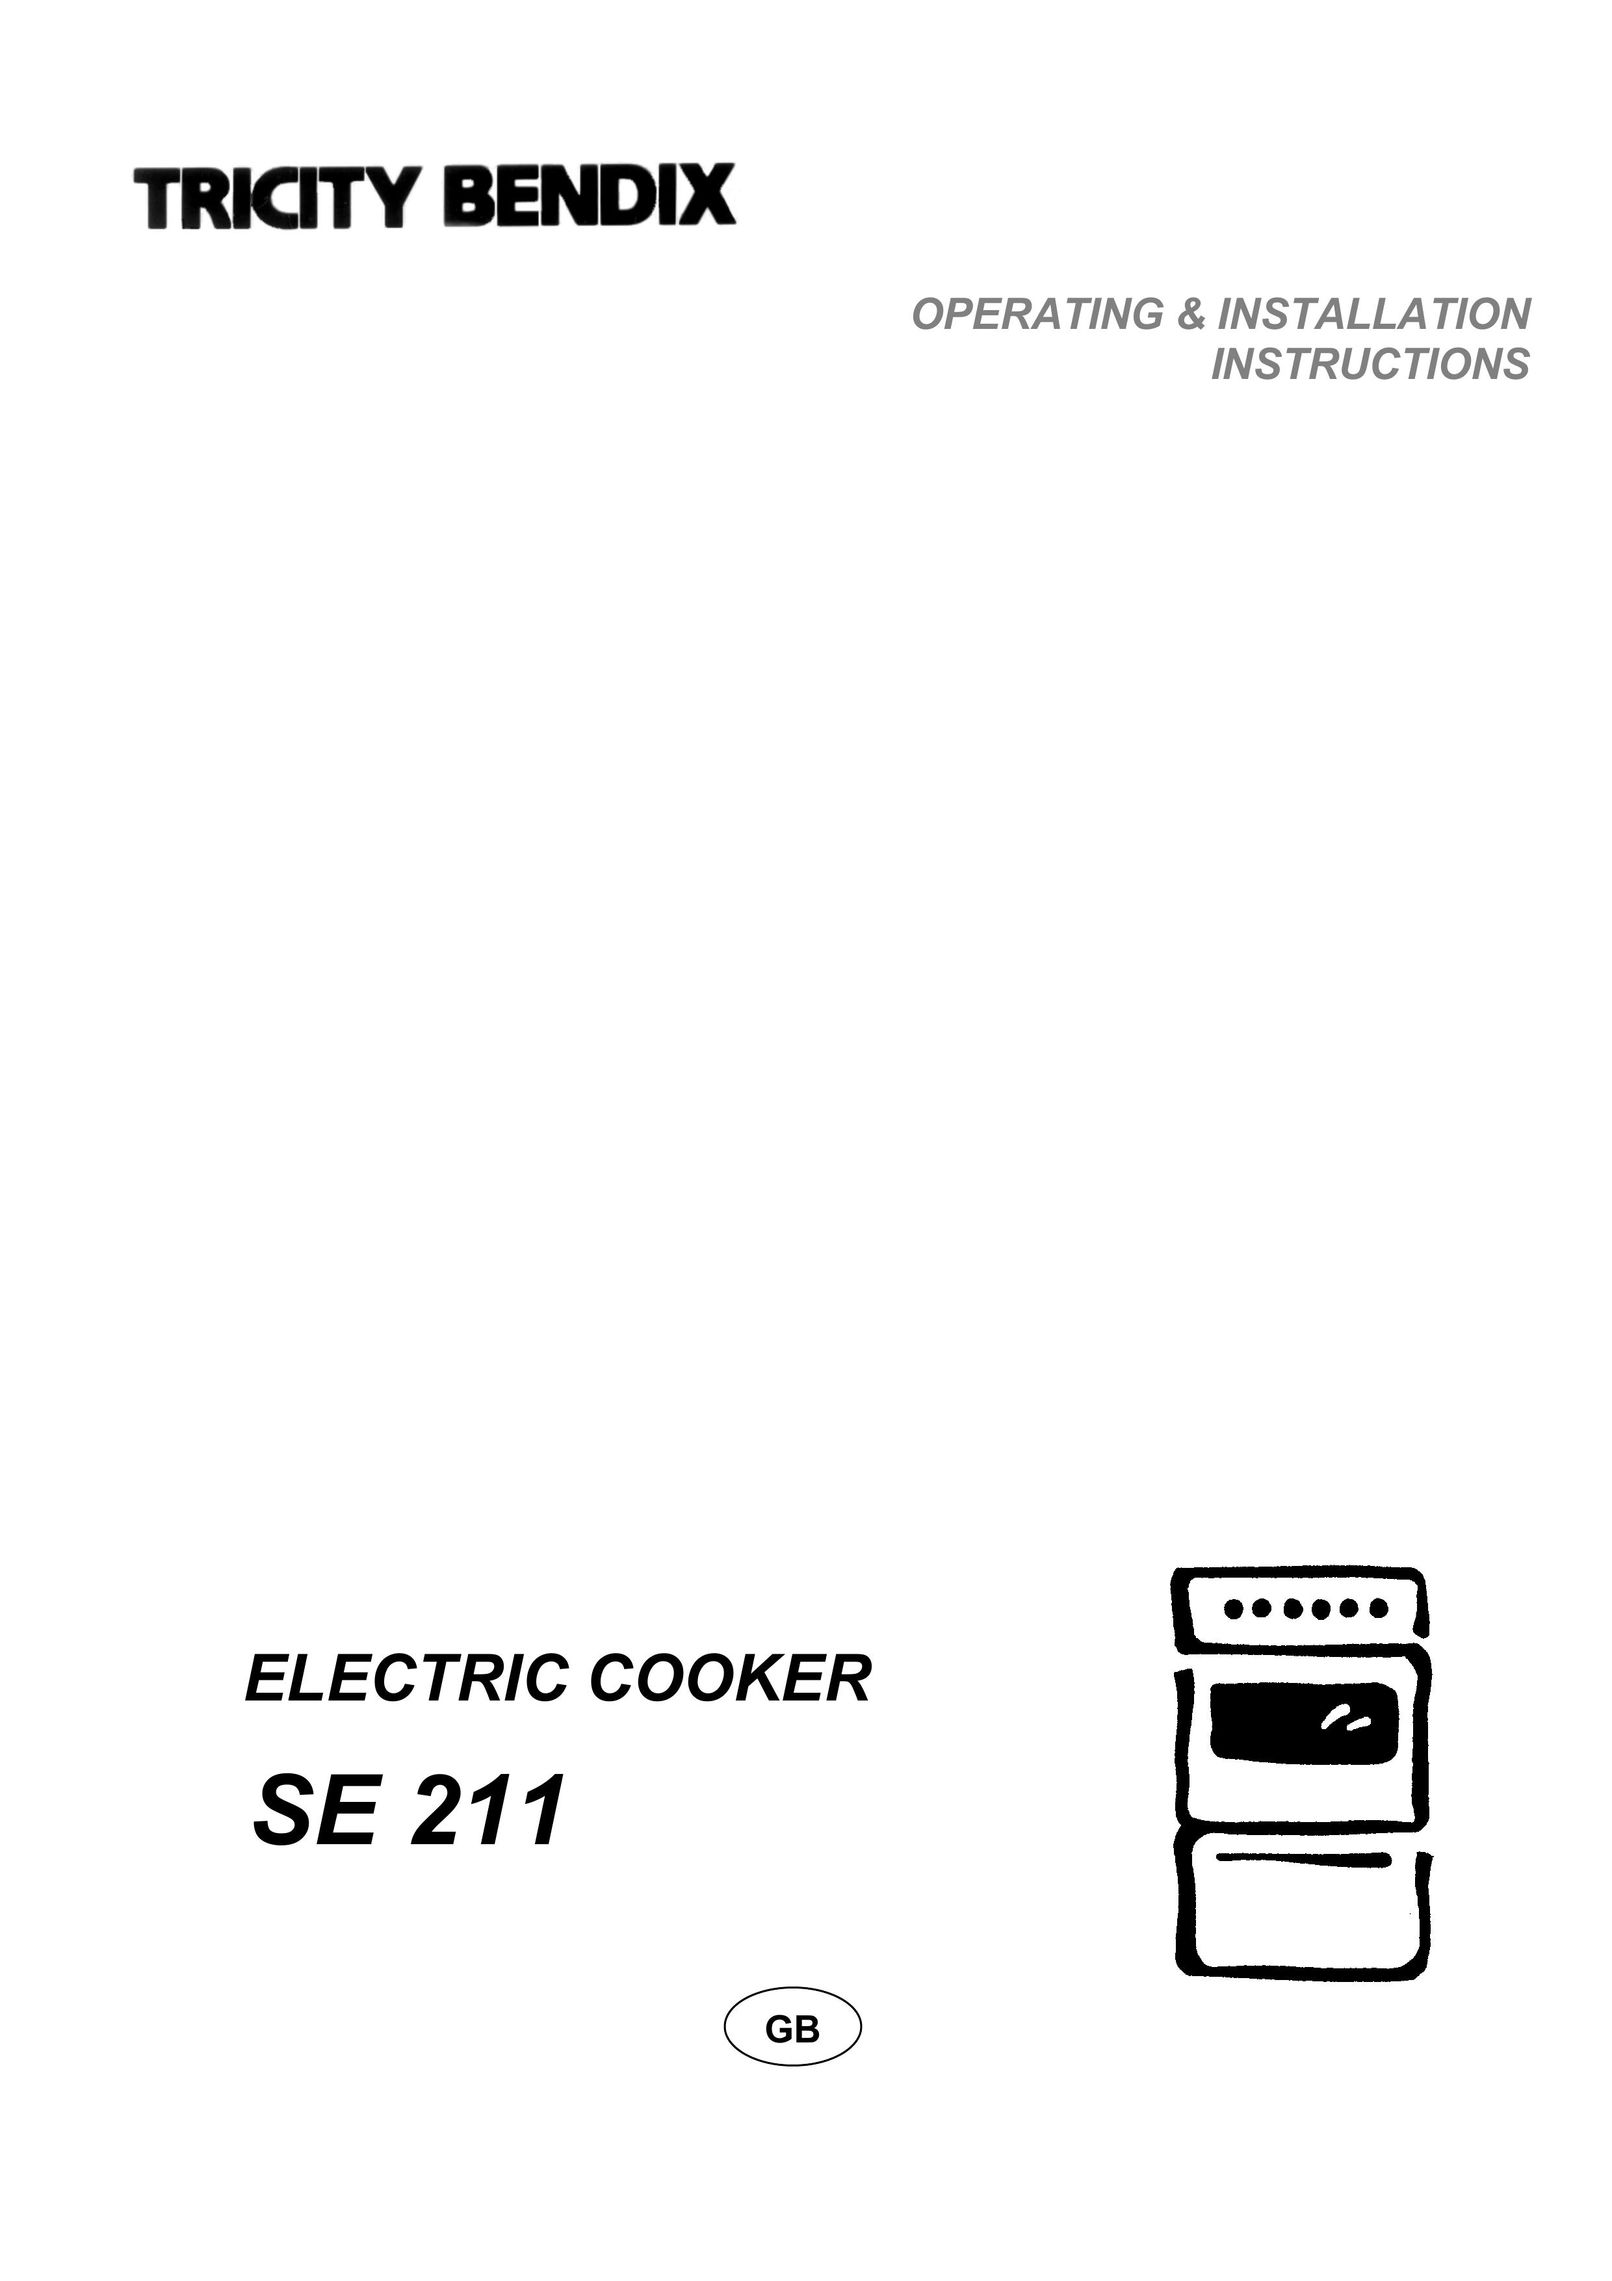 Tricity Bendix SE 211 Cooktop User Manual